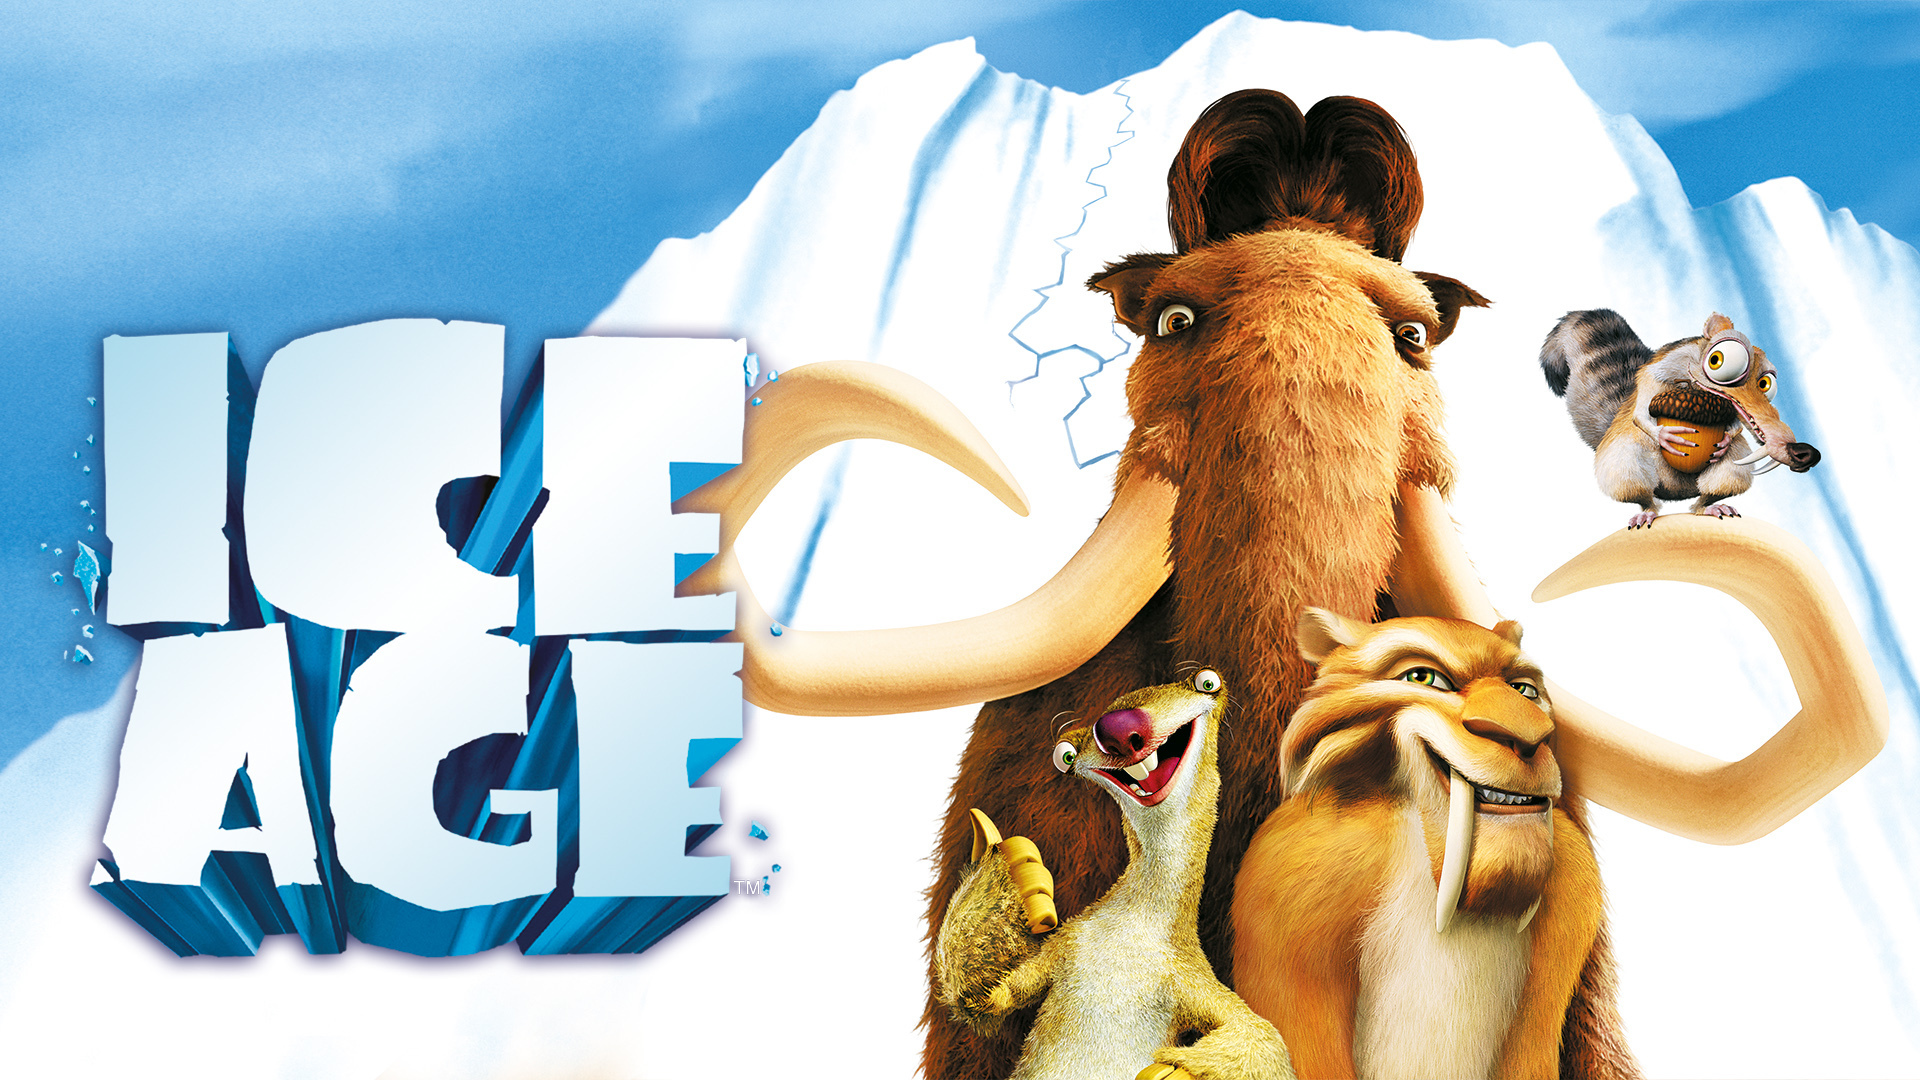 ice age, movie, diego (ice age), manny (ice age), scrat (ice age), sid (ice age)